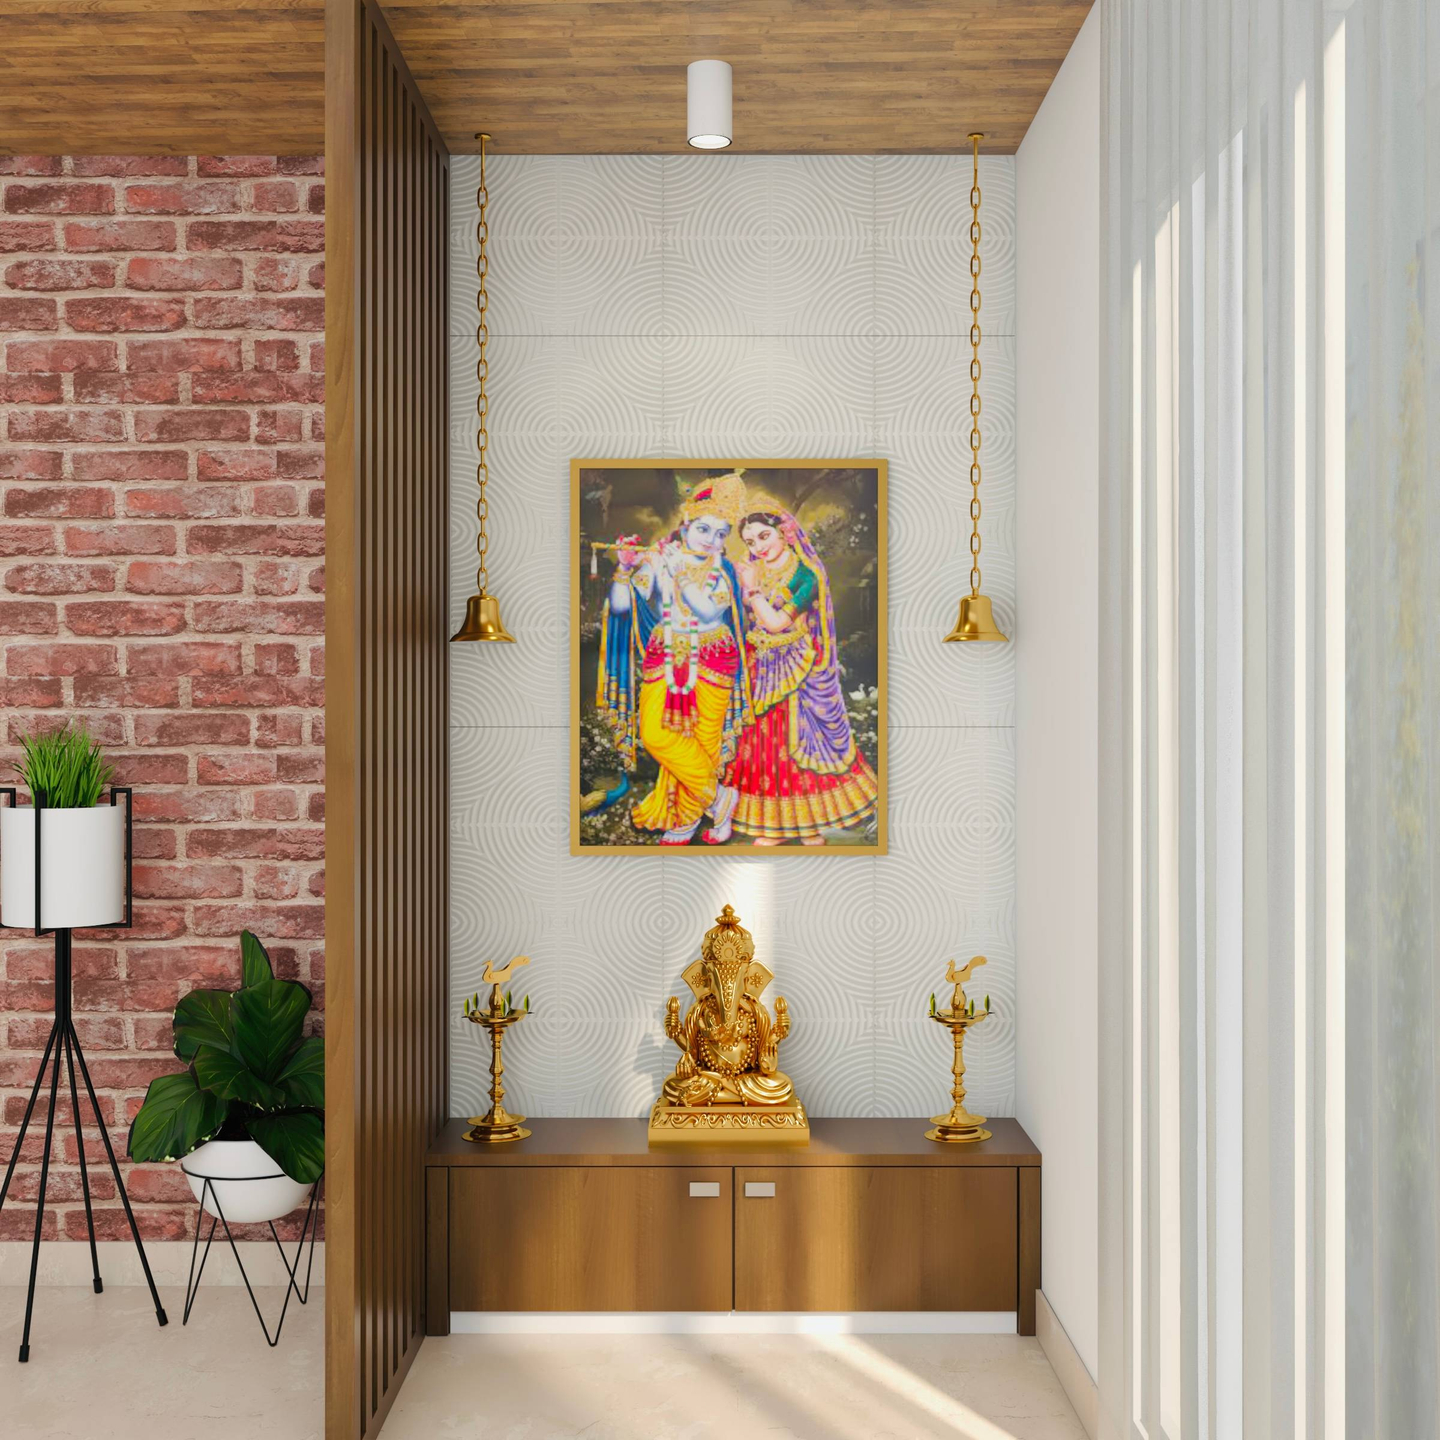 Compact Pooja Room Design With Wooden Platform - Livspace